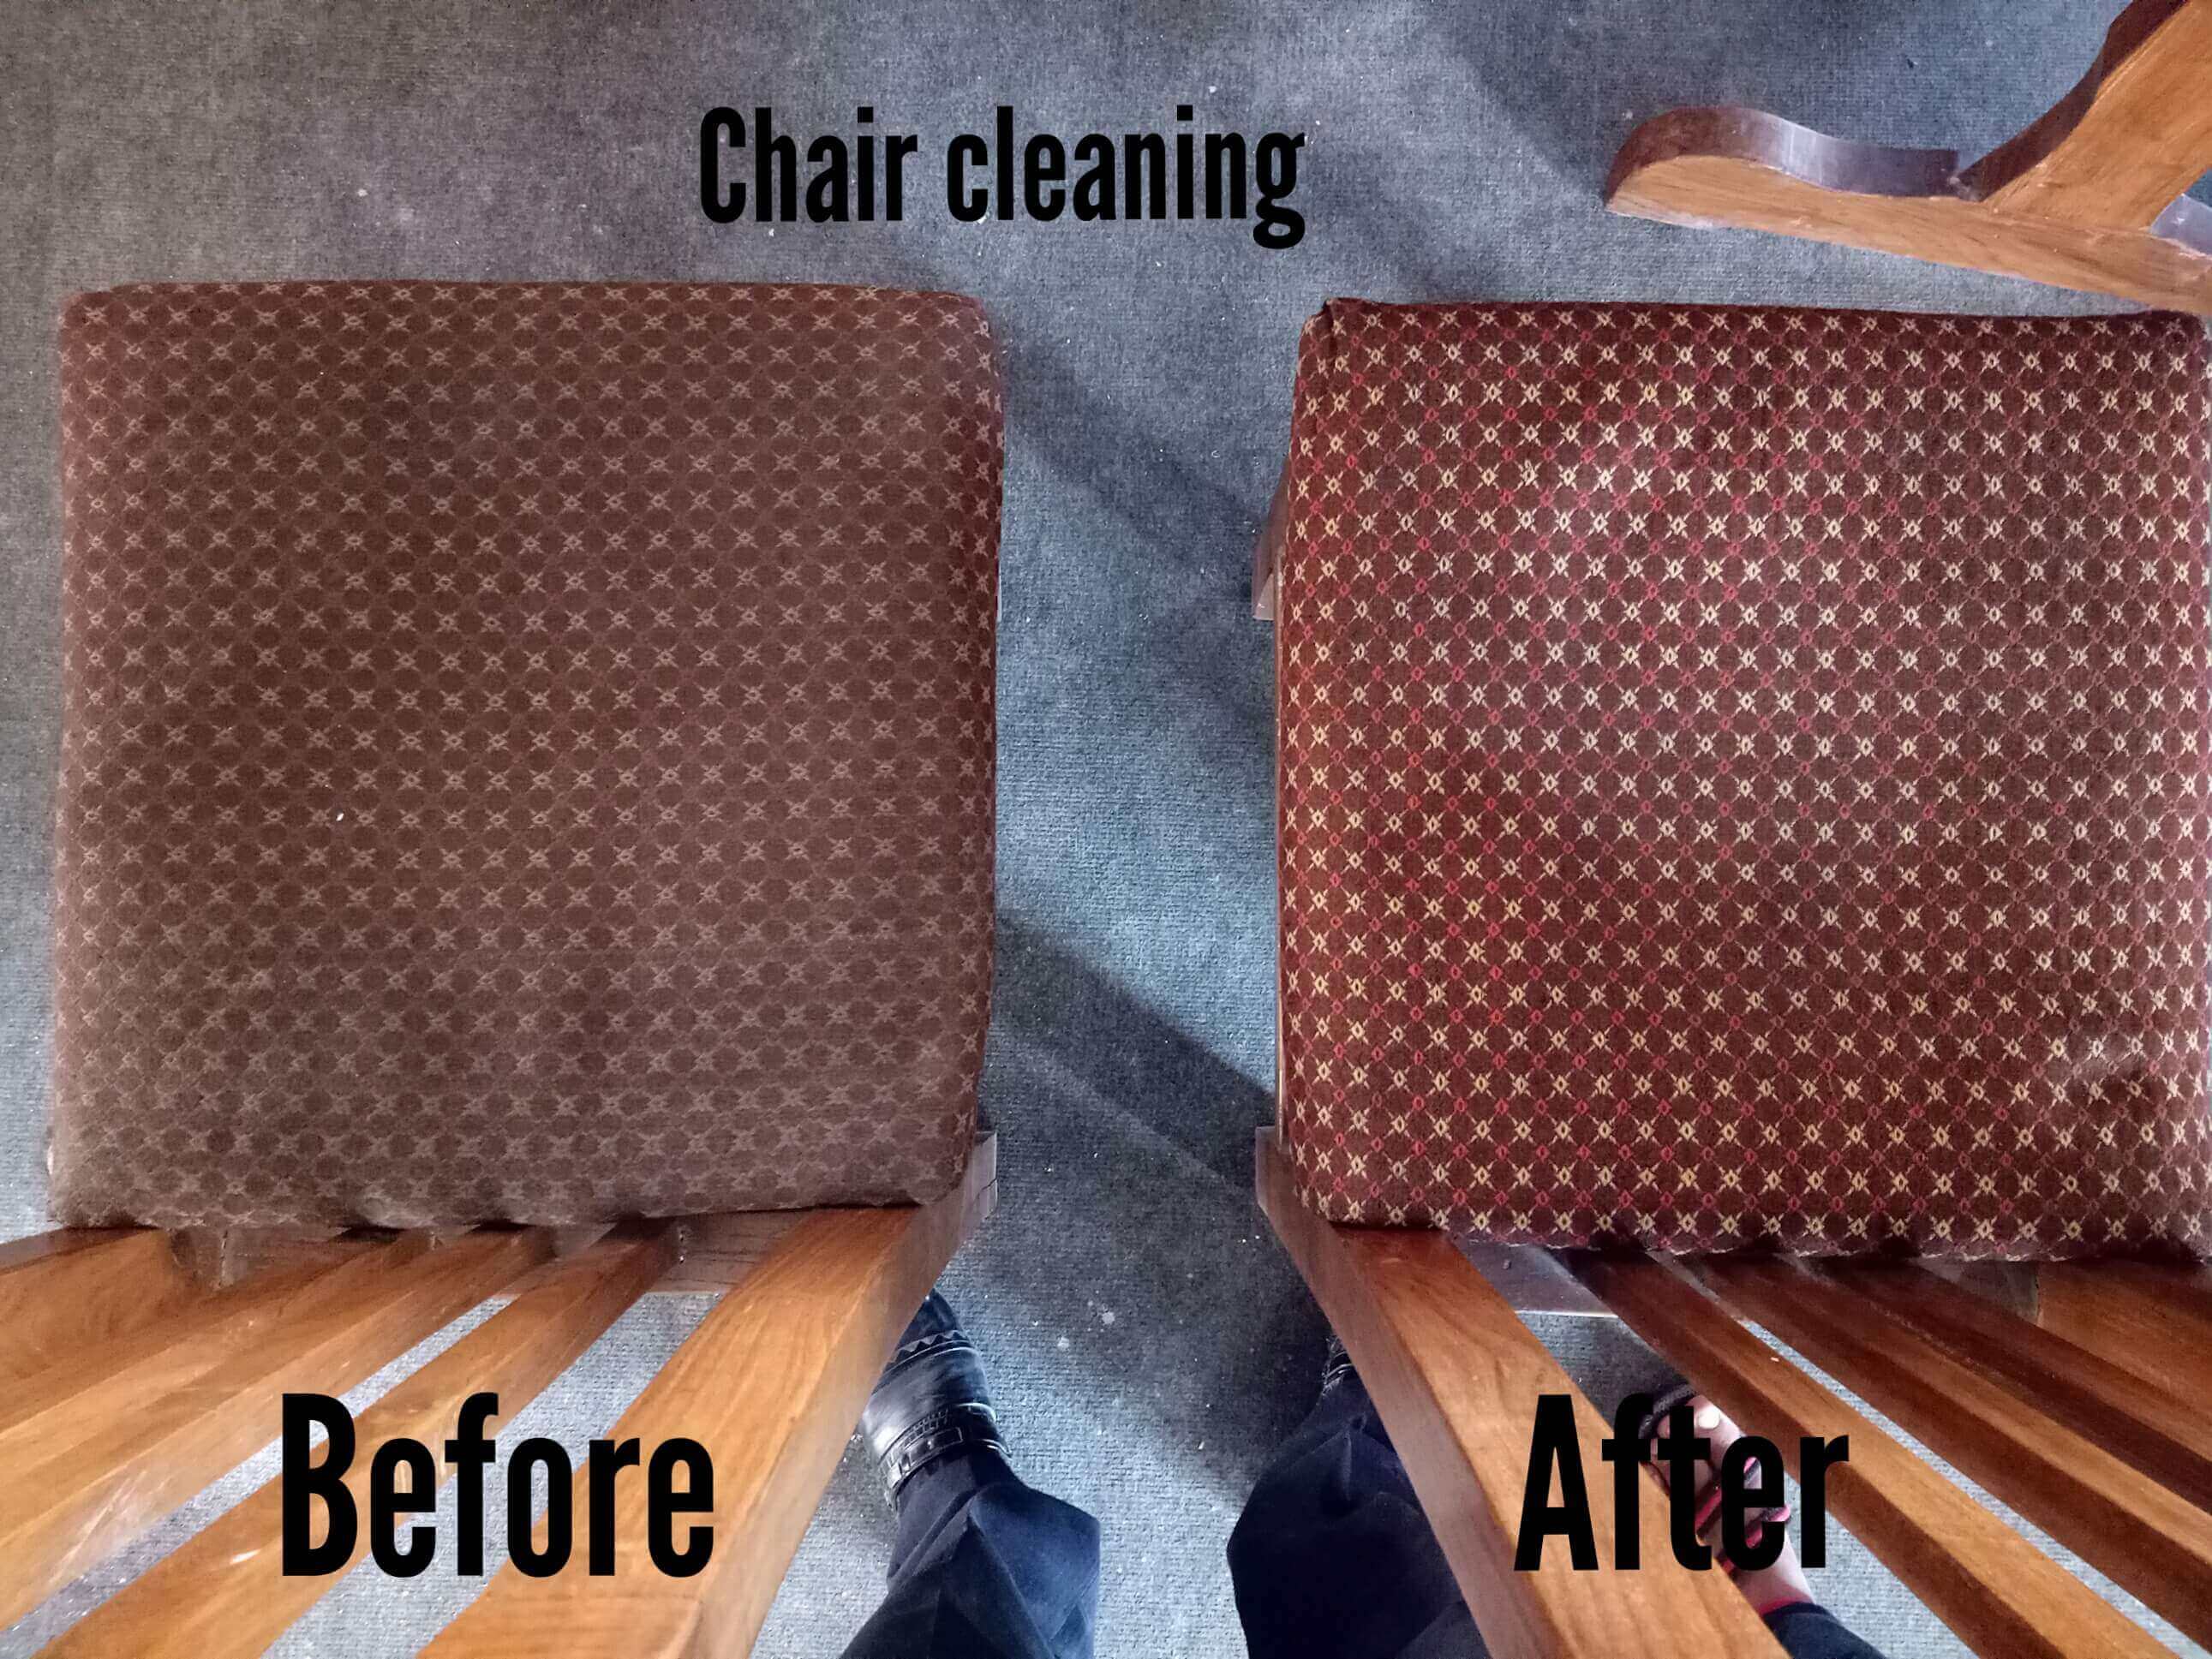 Chair Cleaning service in kathmandu Nepal